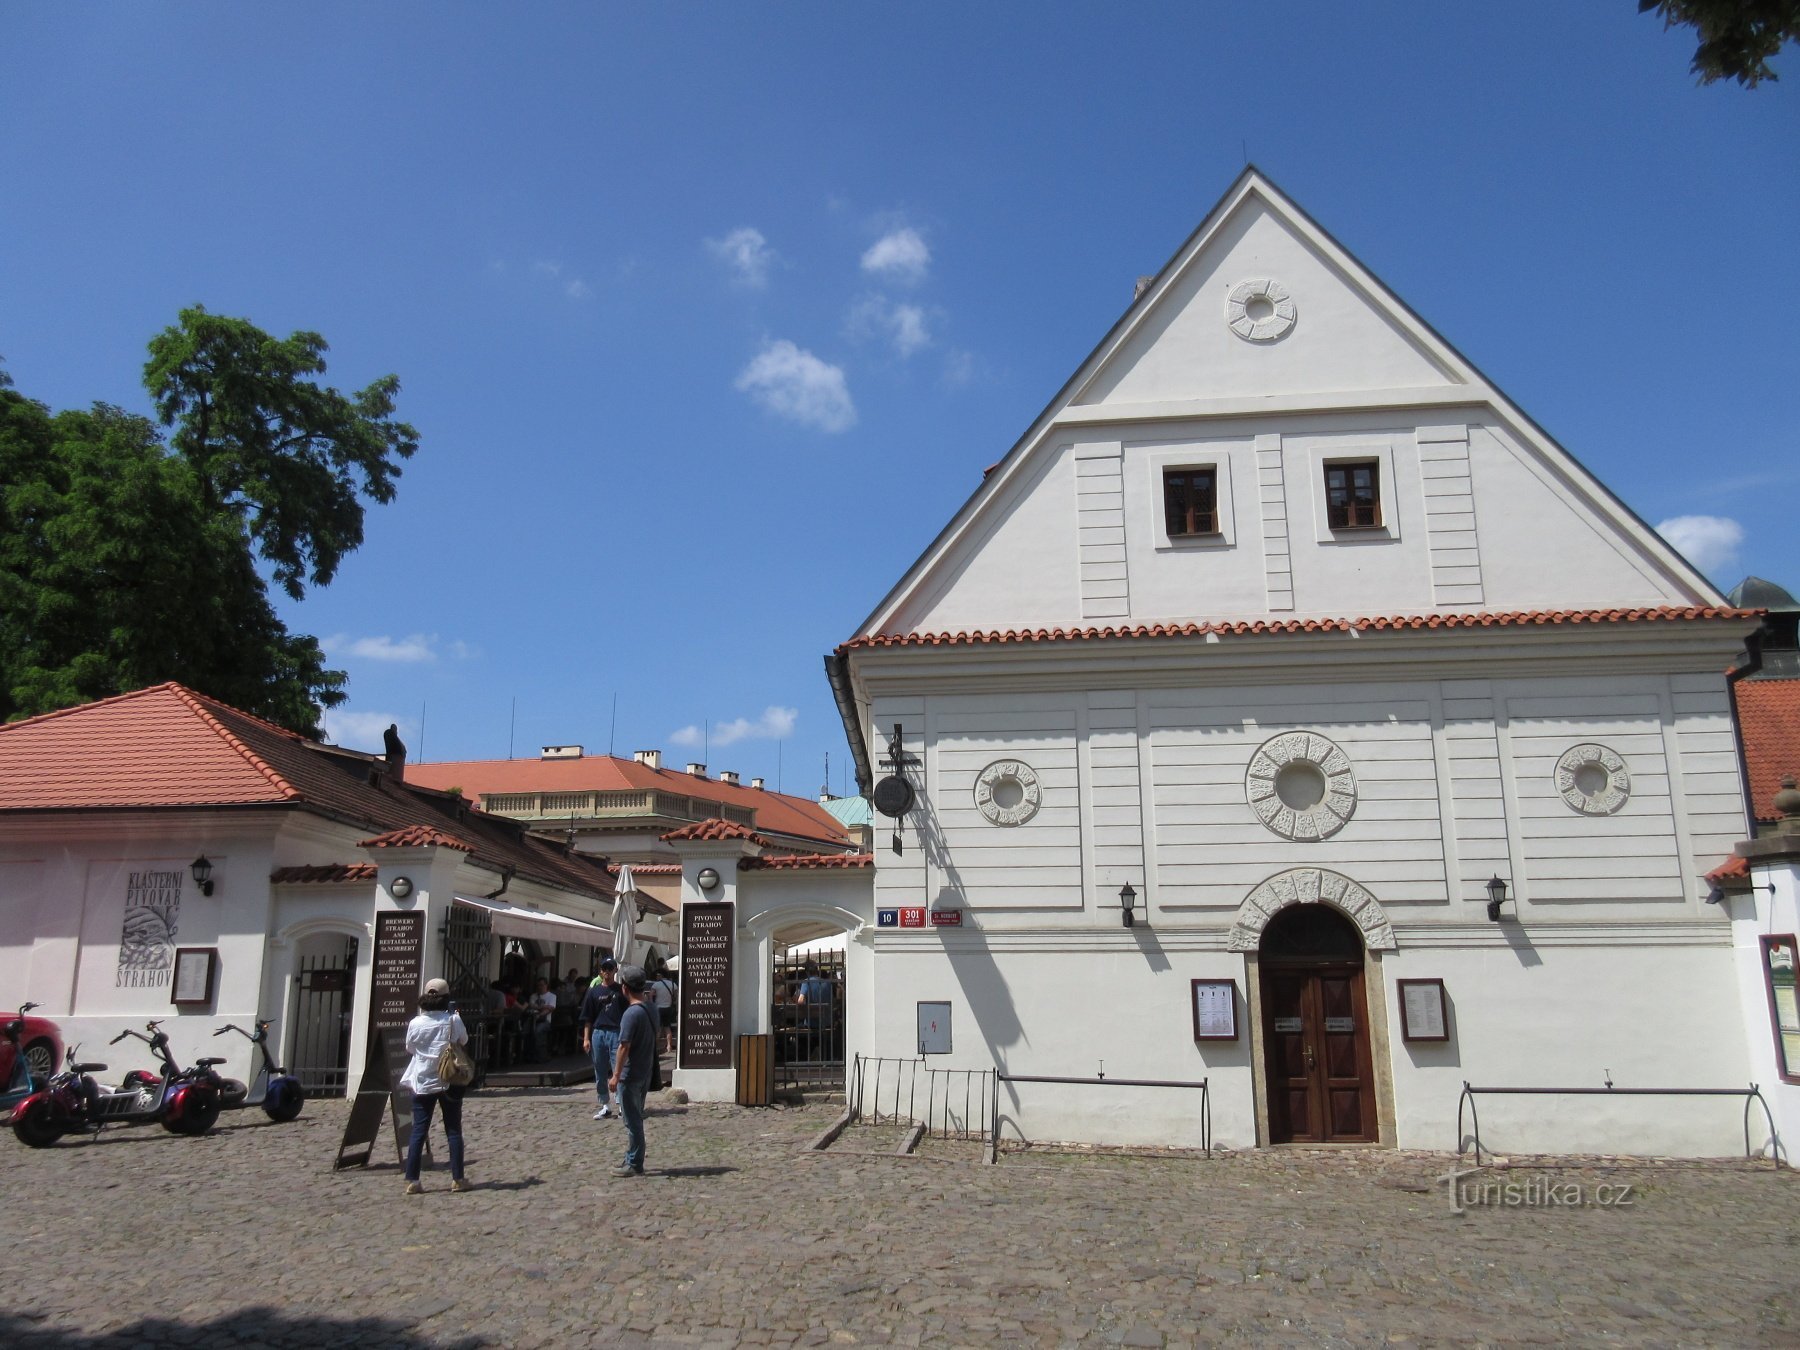 Berăria mănăstirii Strahov cu restaurant Sv. Norbert